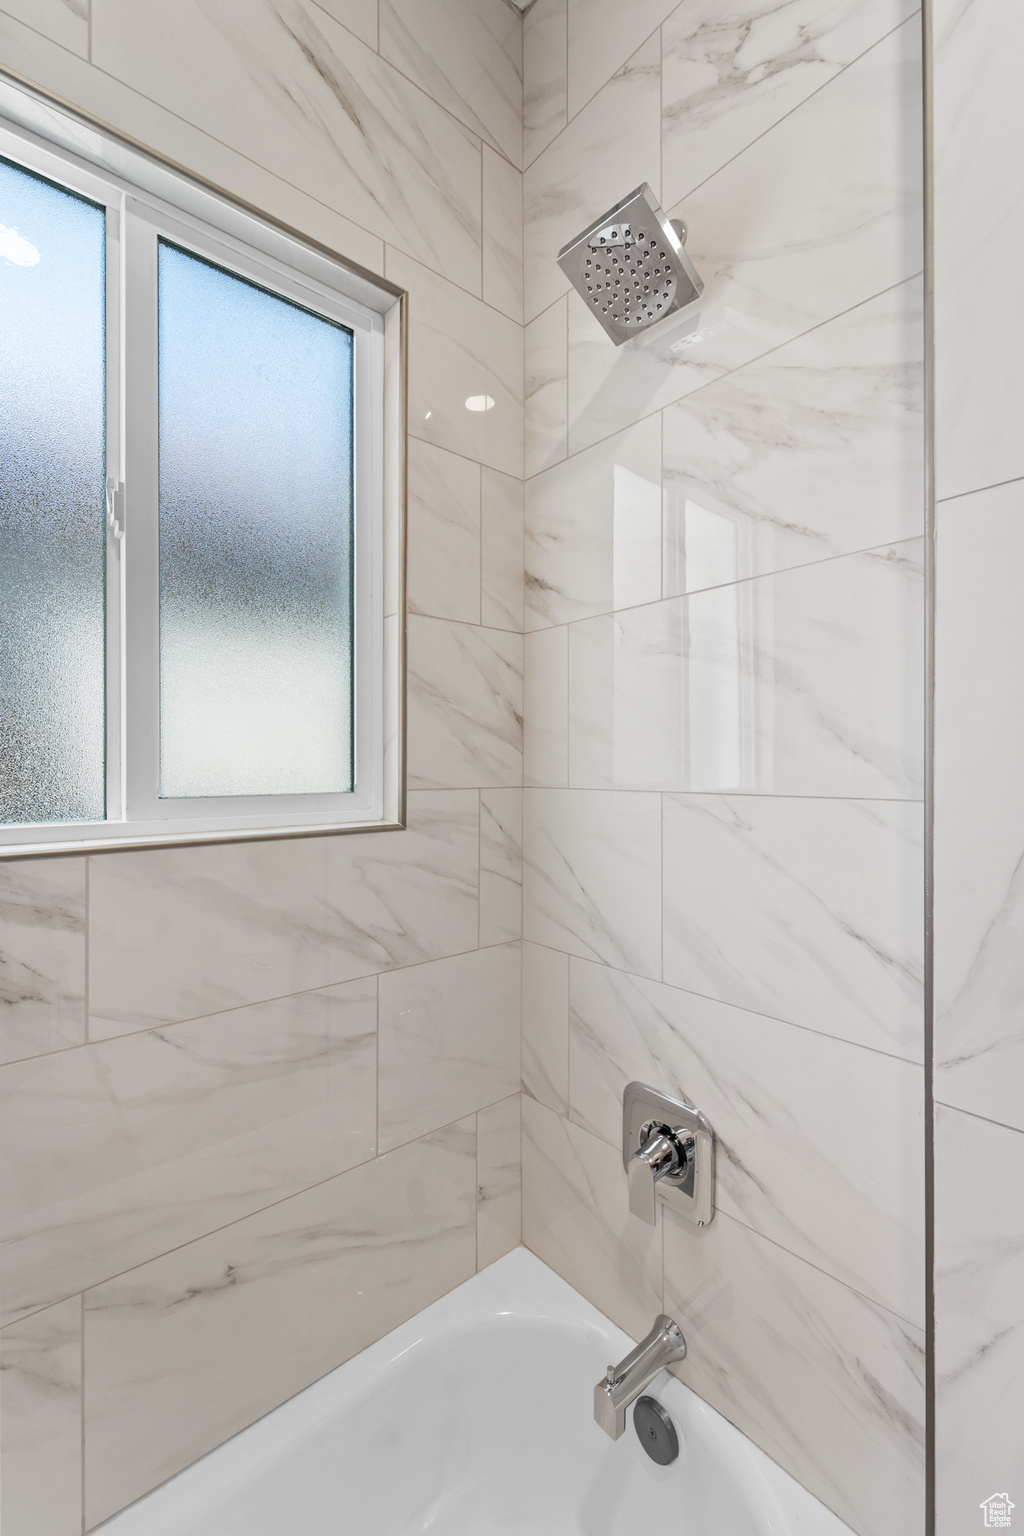 Bathroom featuring tiled shower / bath combo